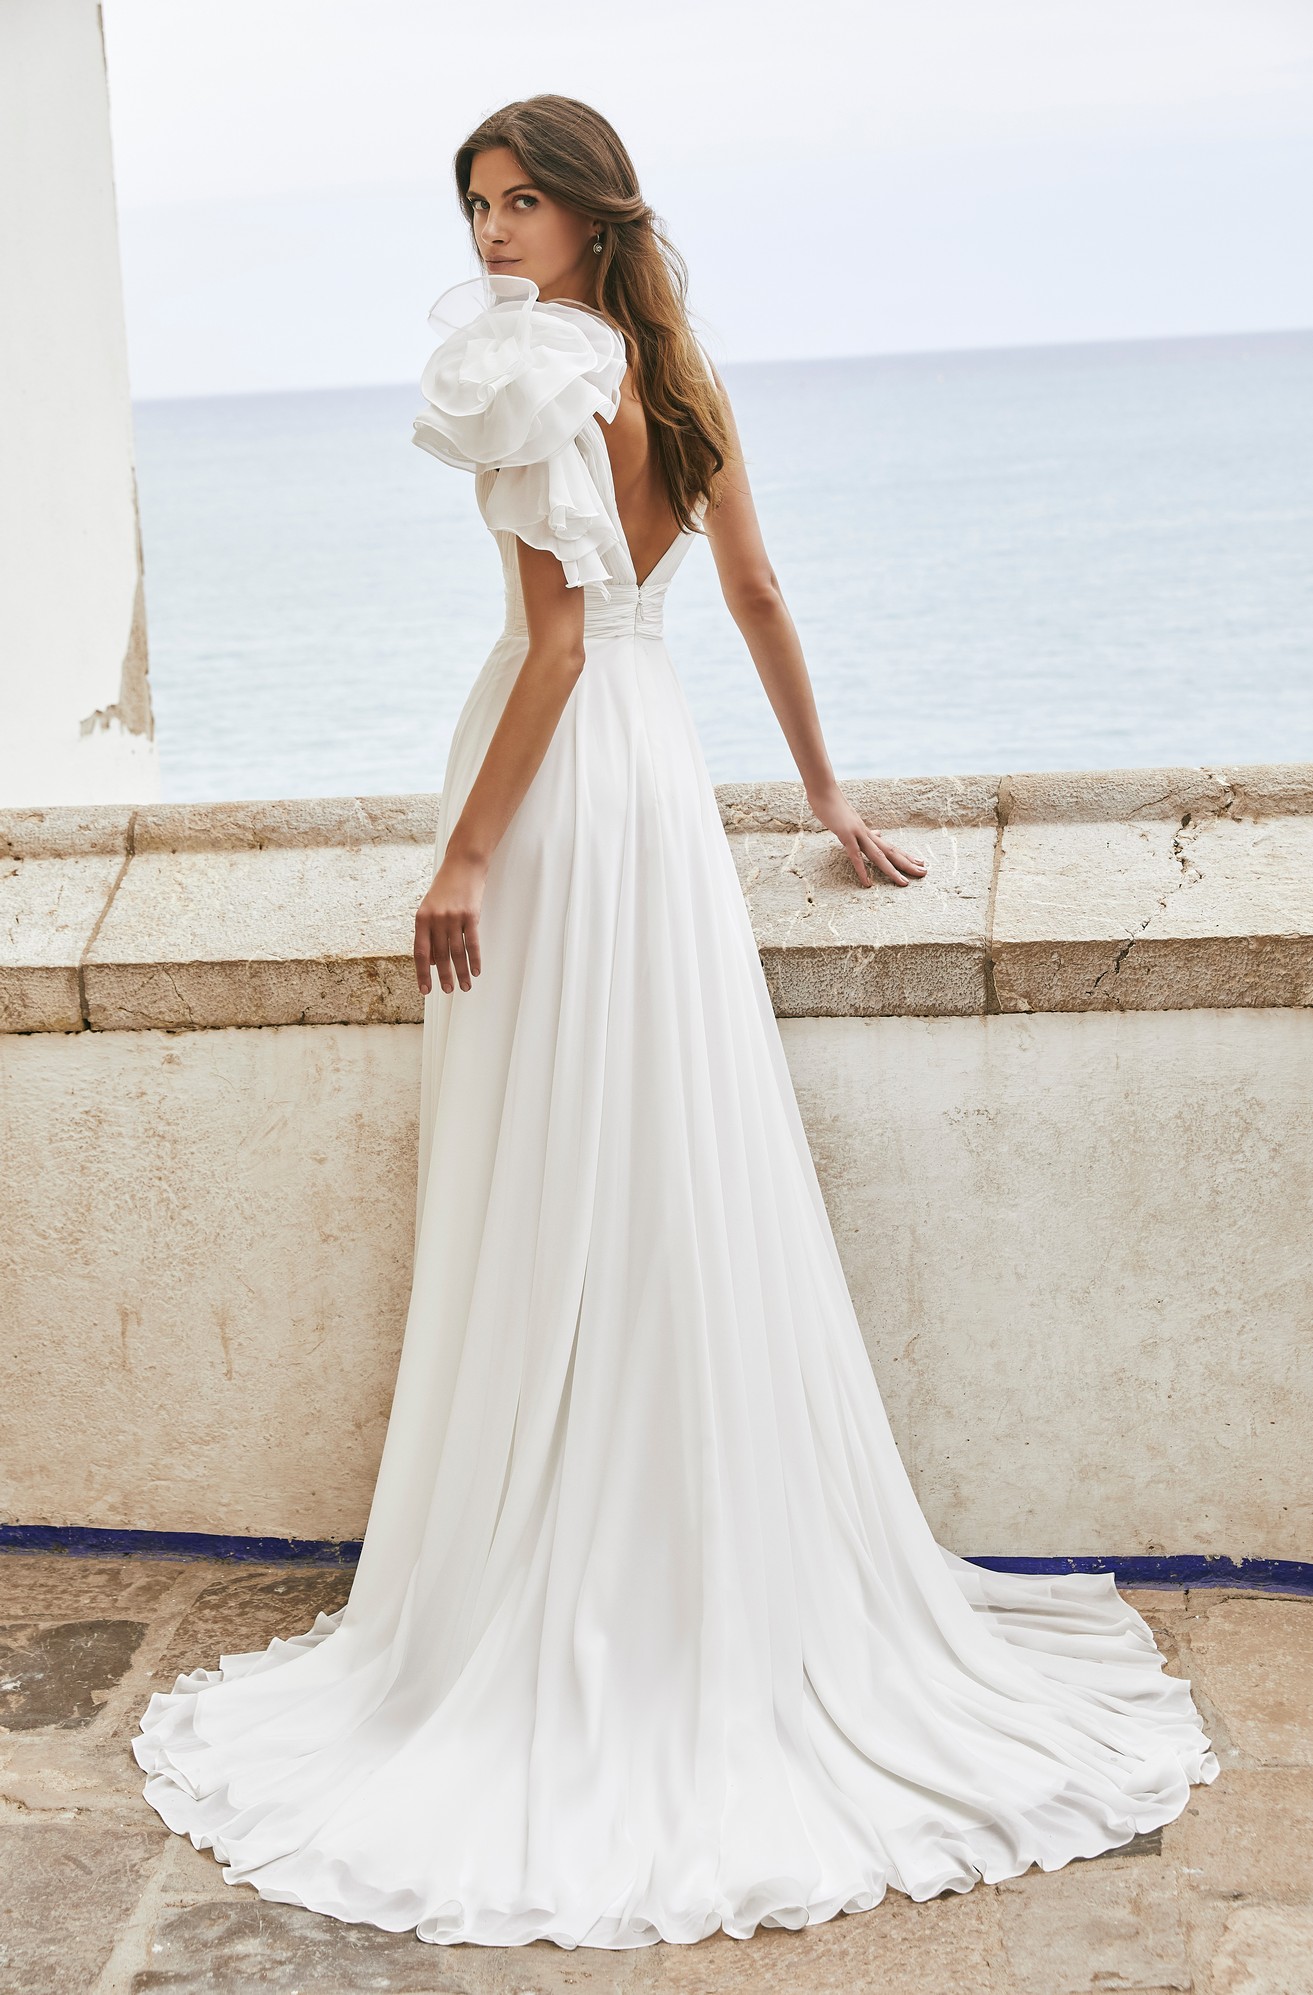 Peony Wedding Dress Victoria Jane Sardegna - Atelier La Parigina Cagliari